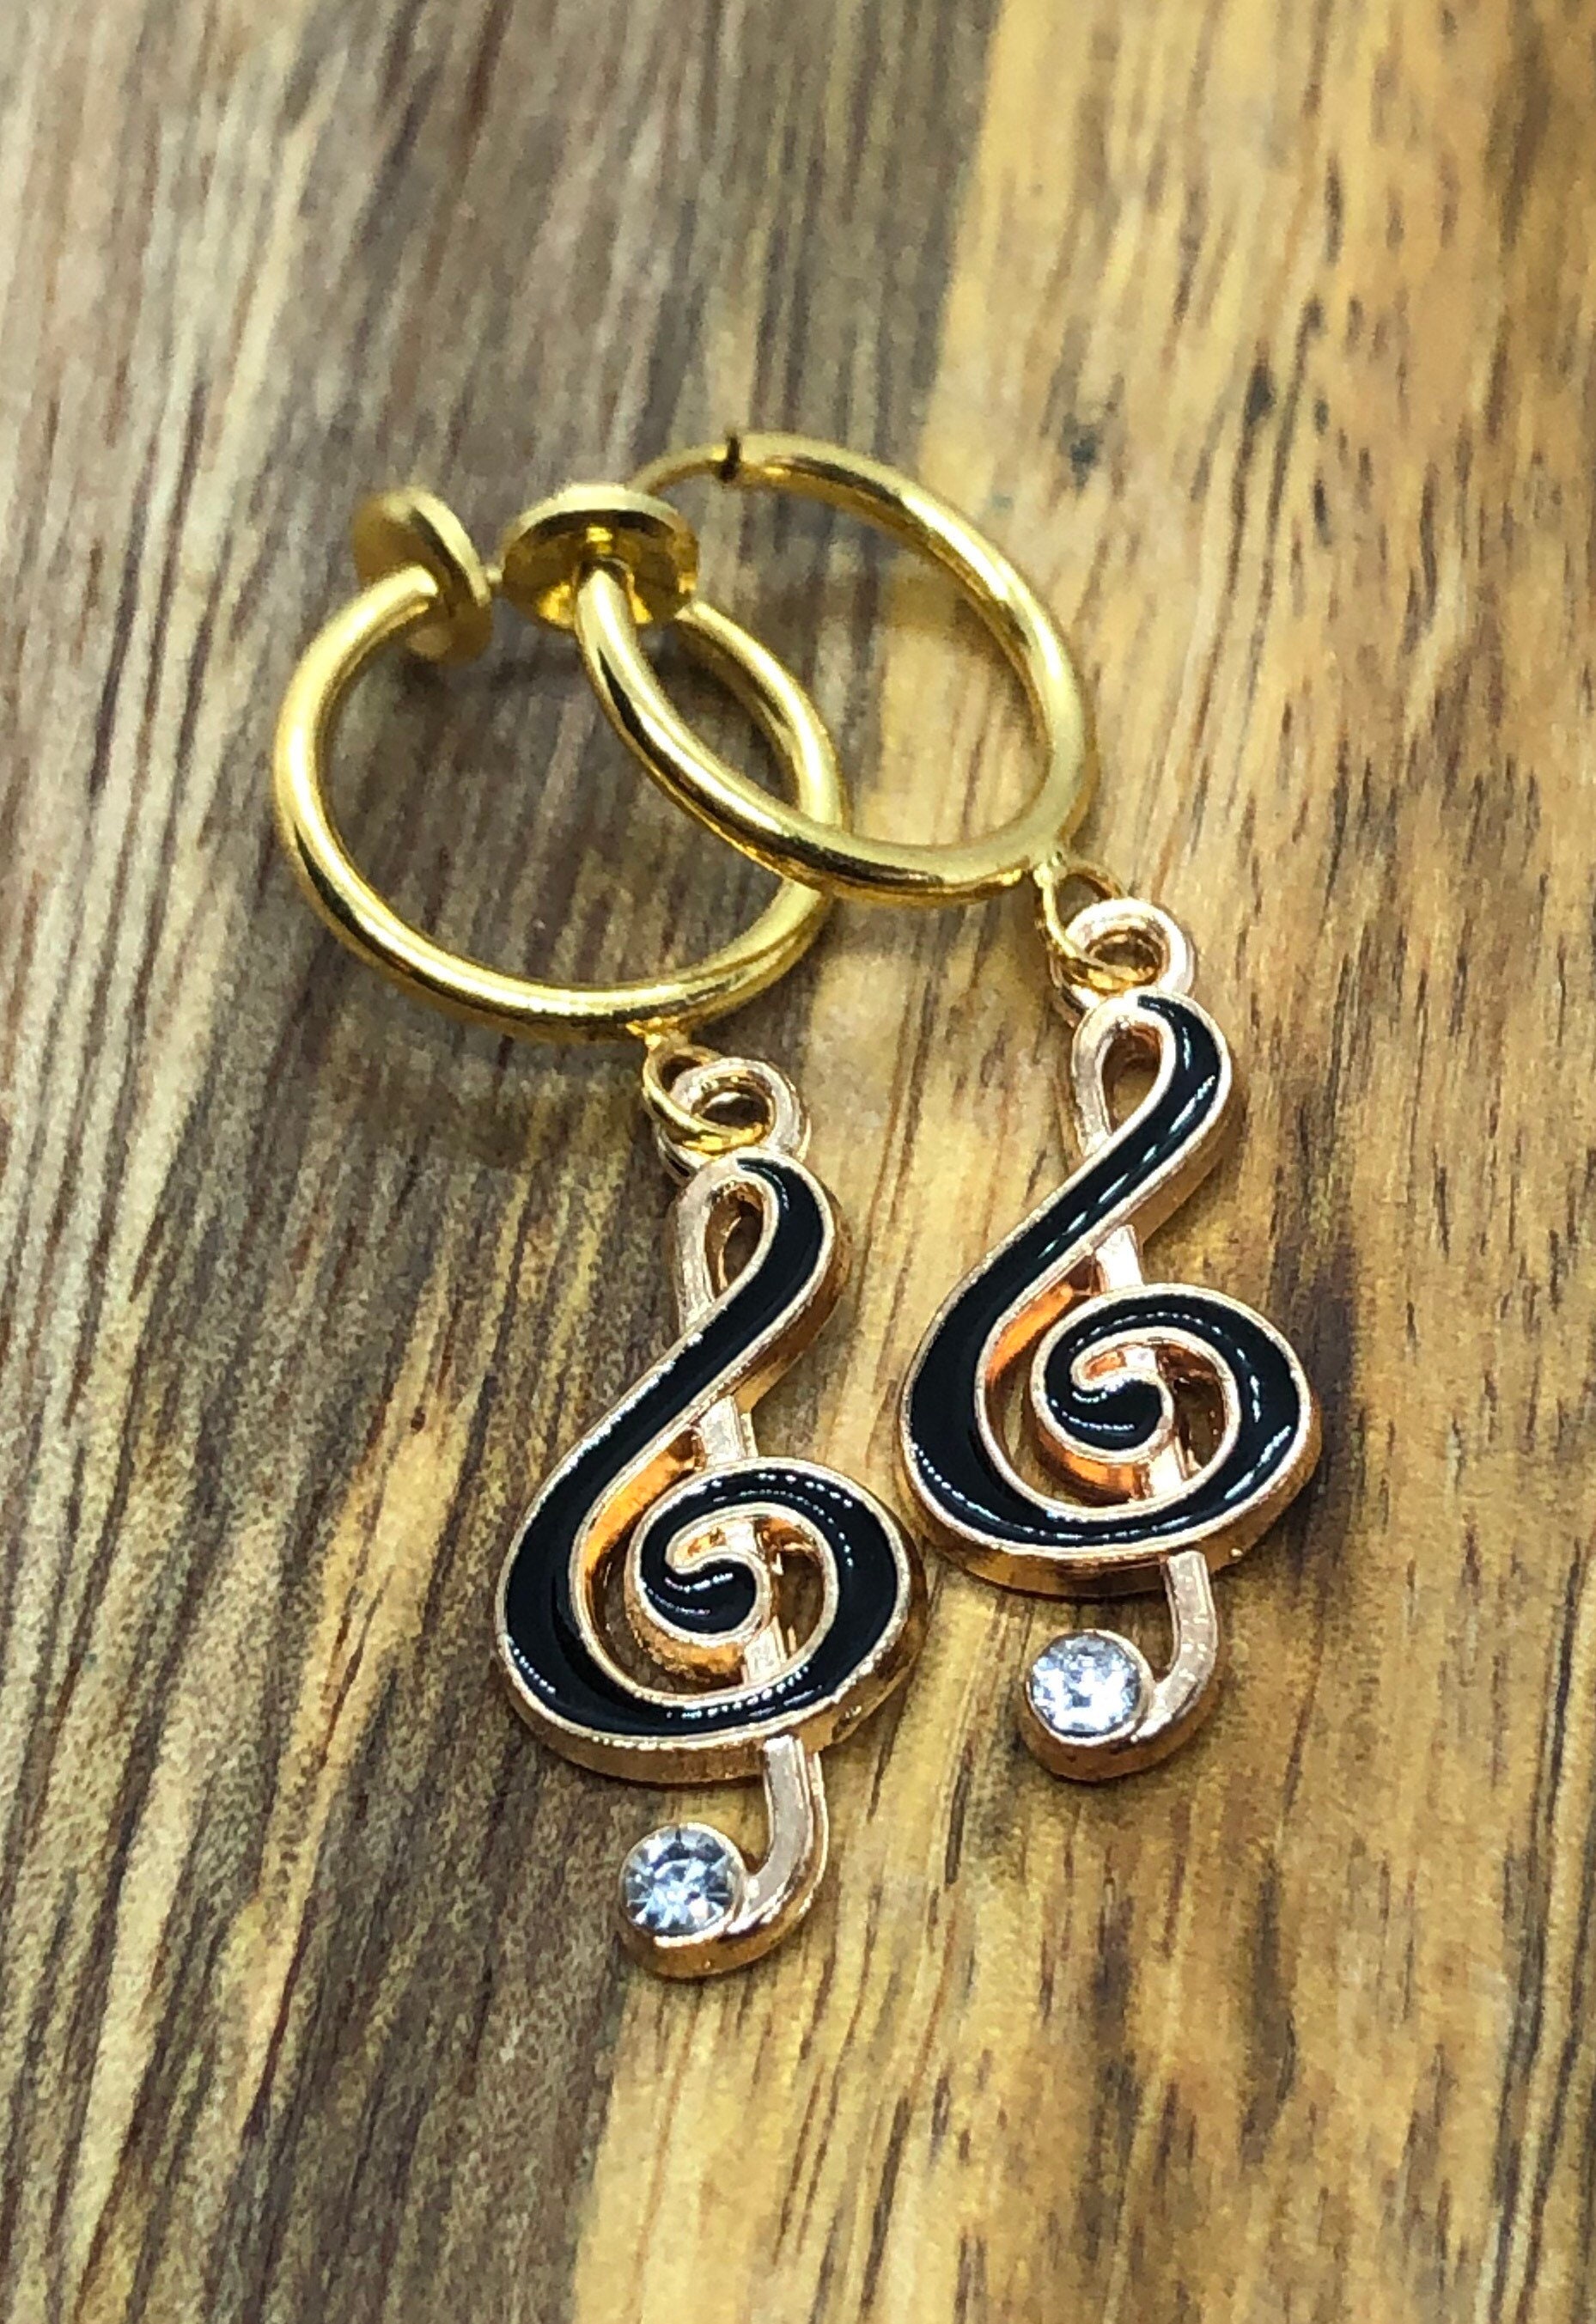 Treble Clef enamel pendant clip on earrings with rhinestone accents spring hoop